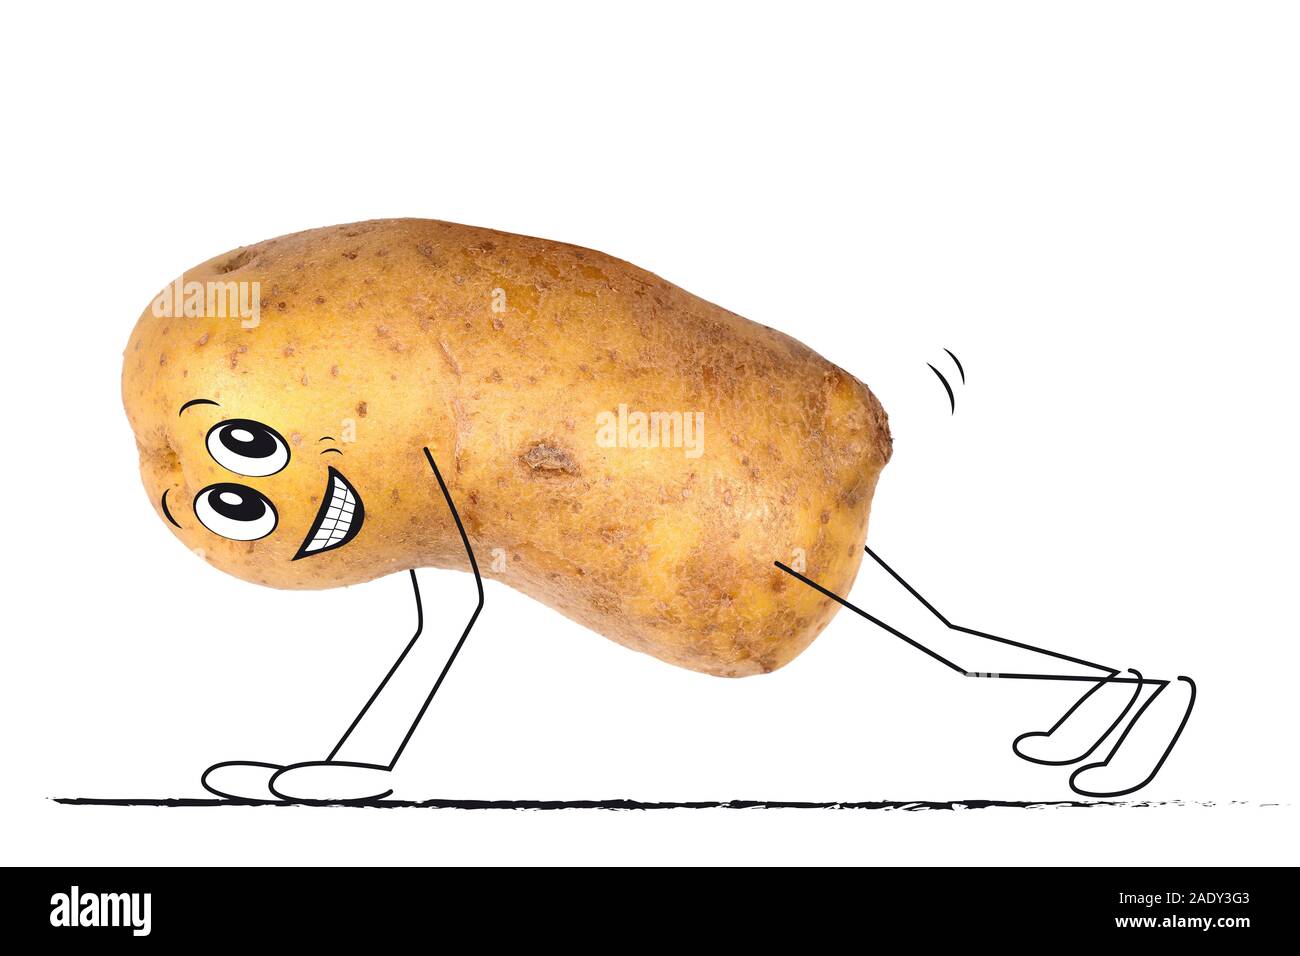 Sporting potato with cartoon characters Stock Photo